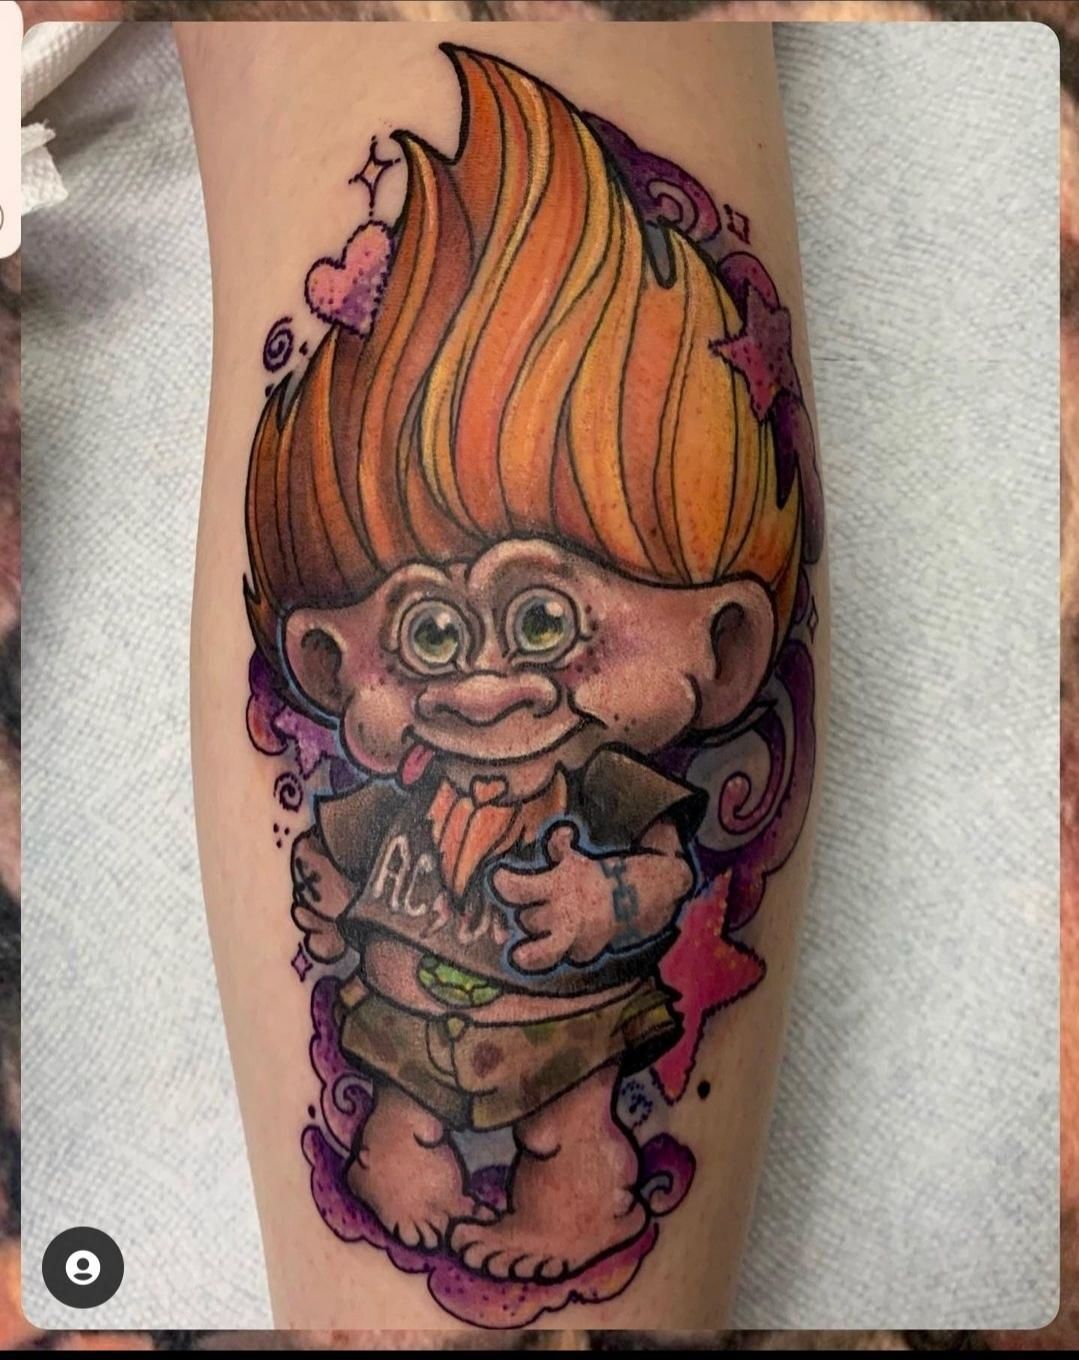 Troll tattoo by leahbtattoos at Waukesha Tattoo Company in Waukesha WI  leahbtattoos waukeshatattoocompany waukesha wisconsin troll   Instagram